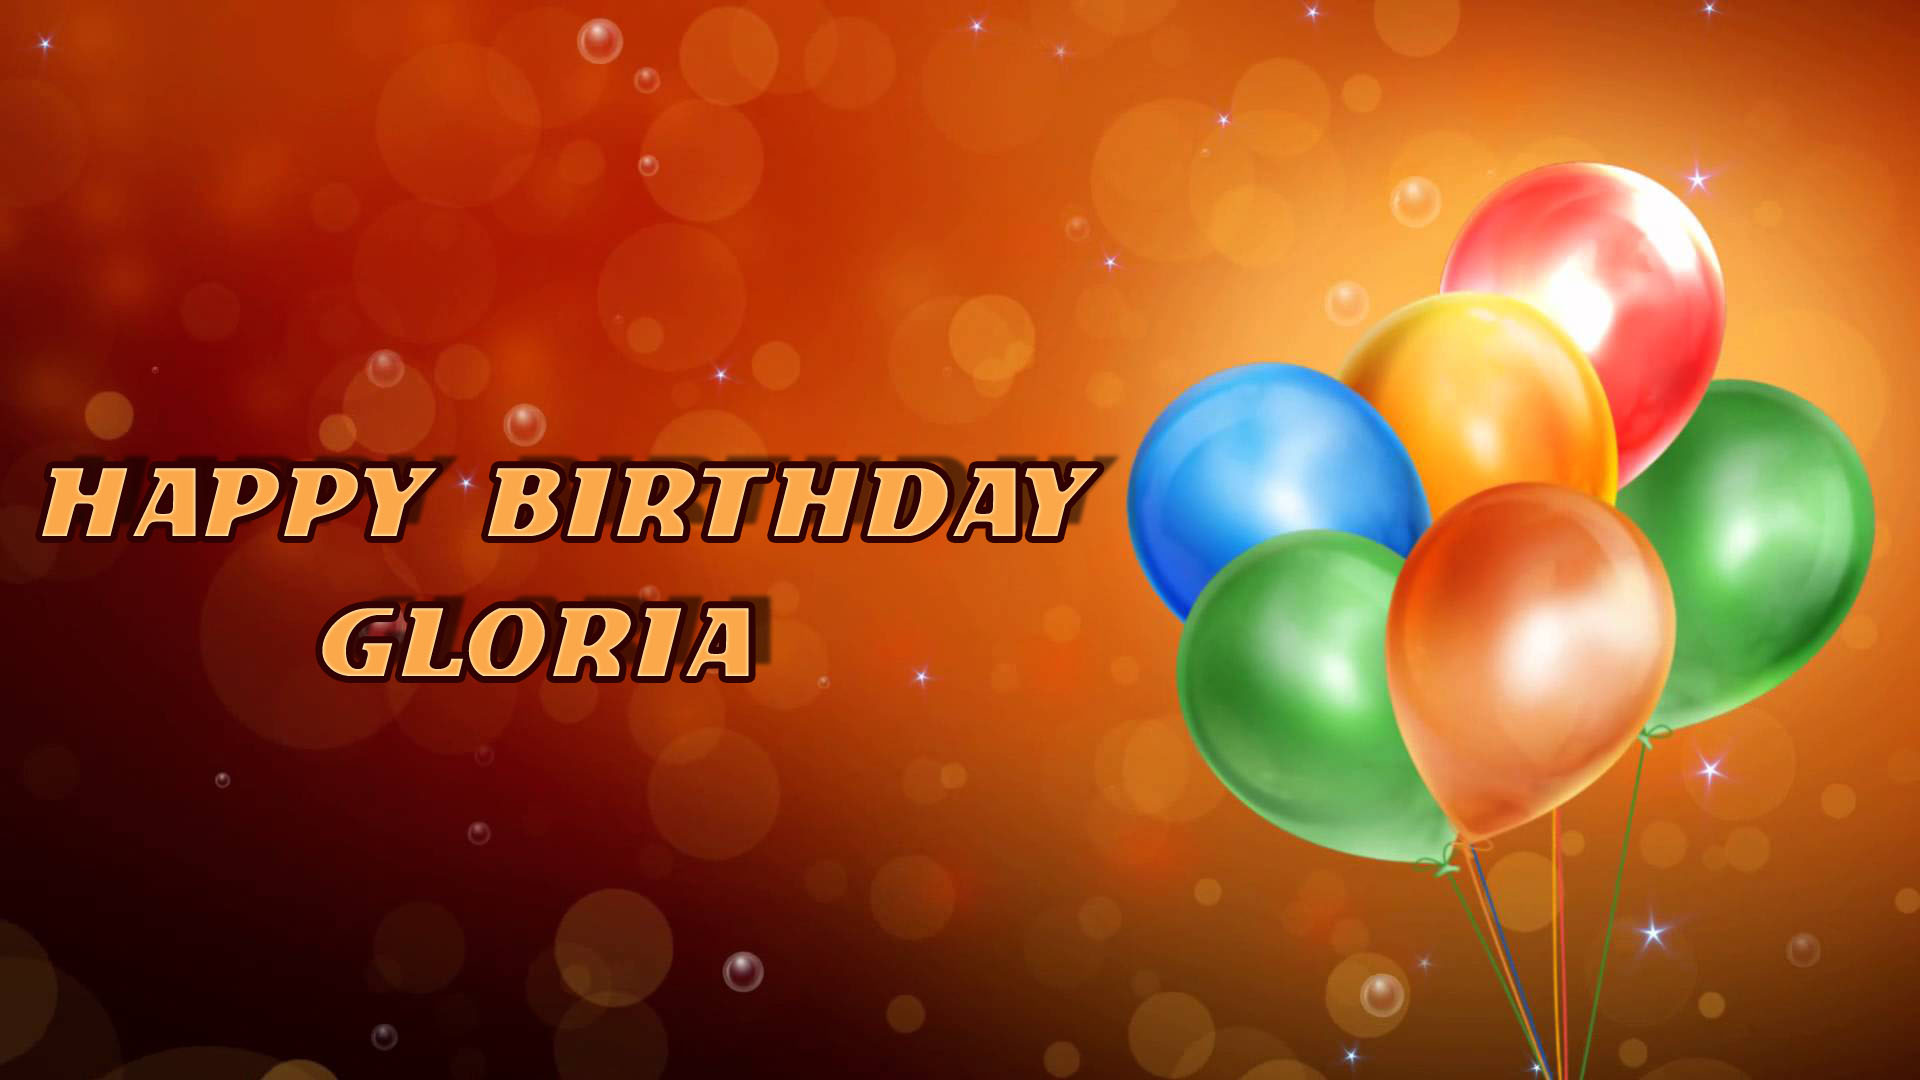 images with names Happy Birthday Gloria image